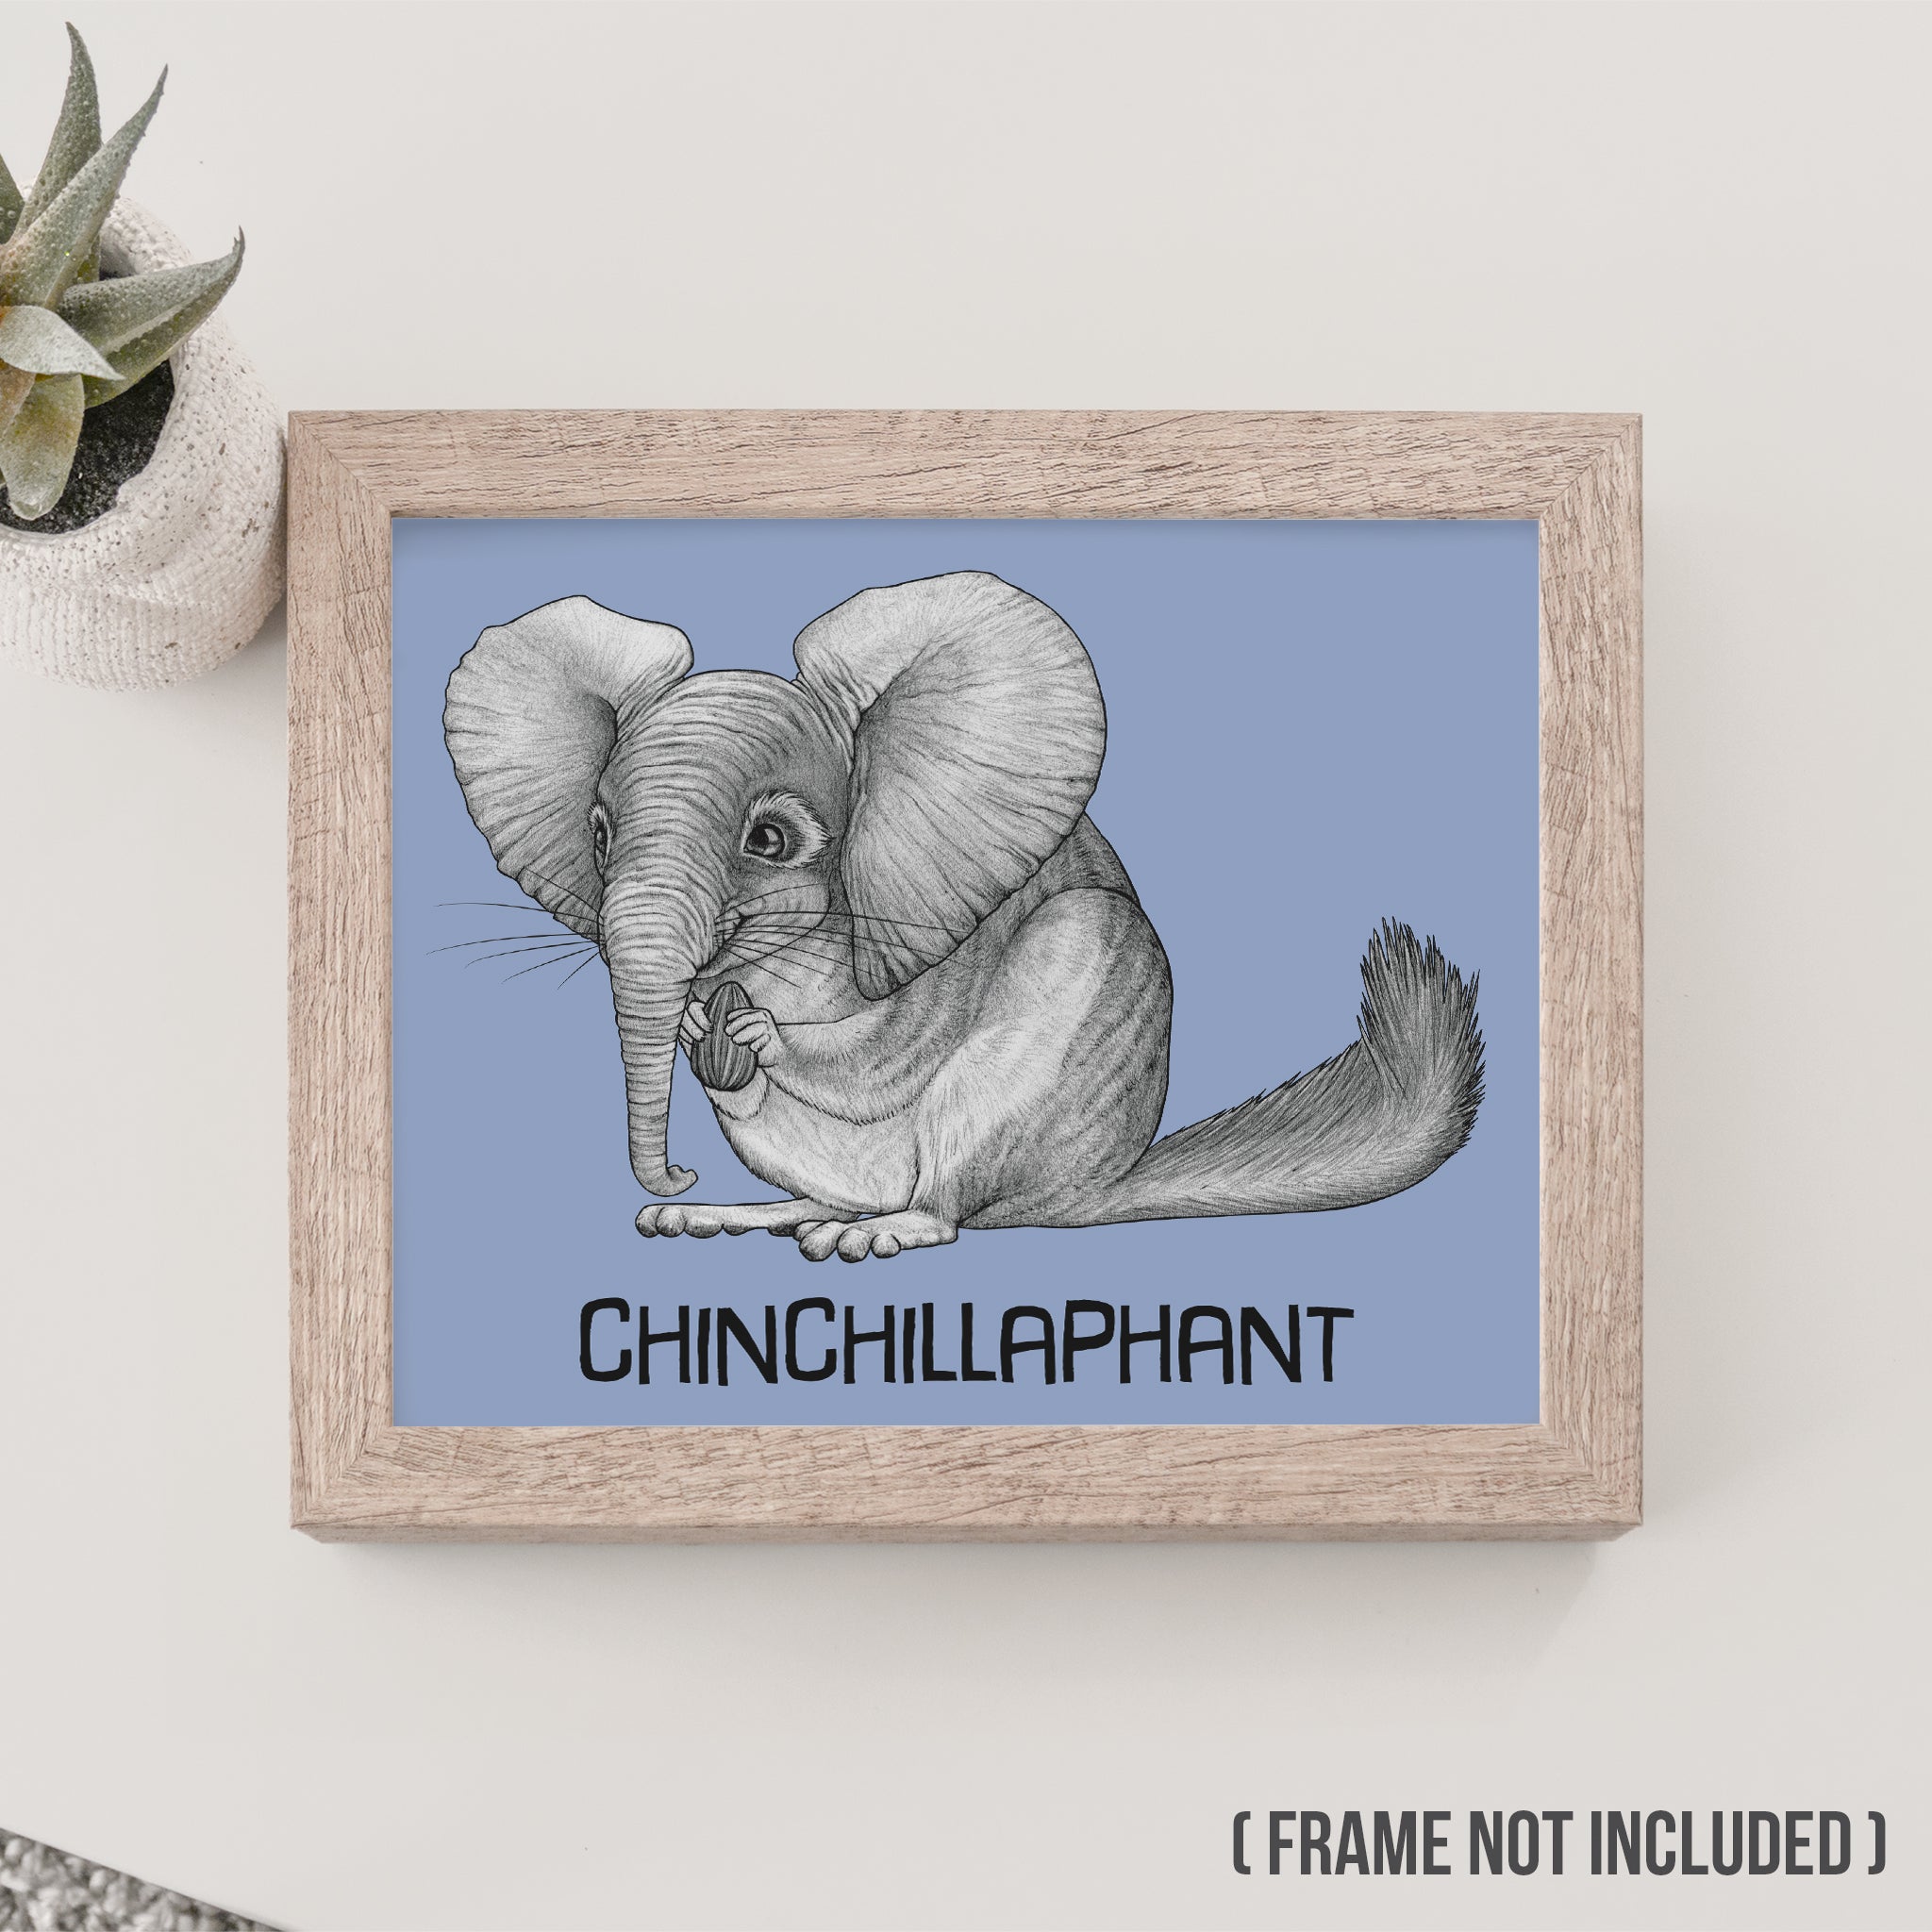 Chinchillaphant 8x10" Color Print